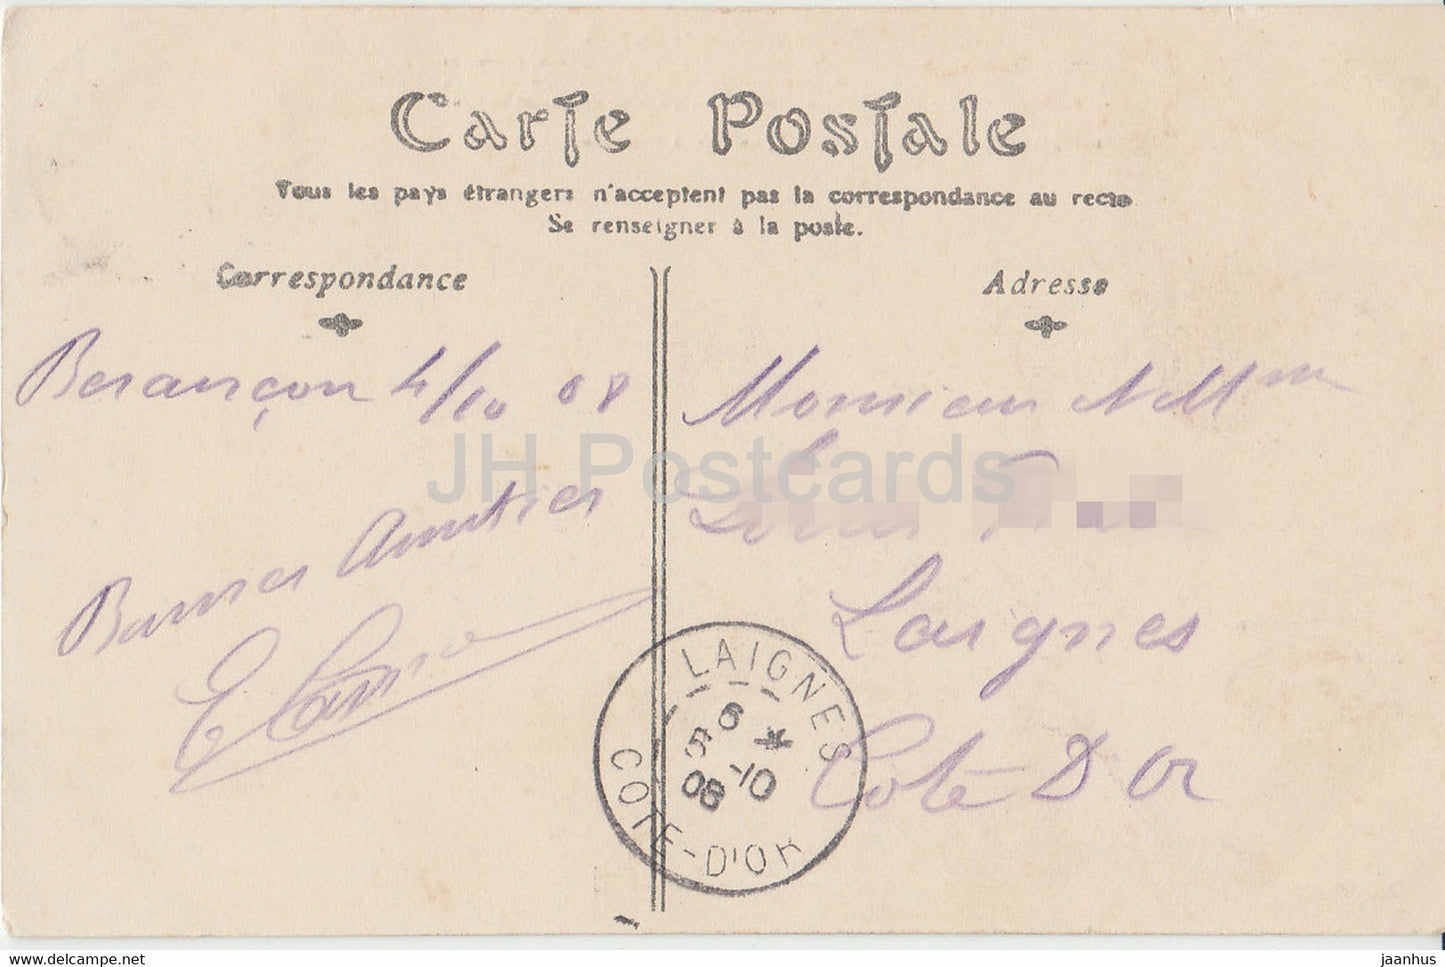 Besancon - L'Horloge de St Jean - clock - old postcard - 1908 - France - used